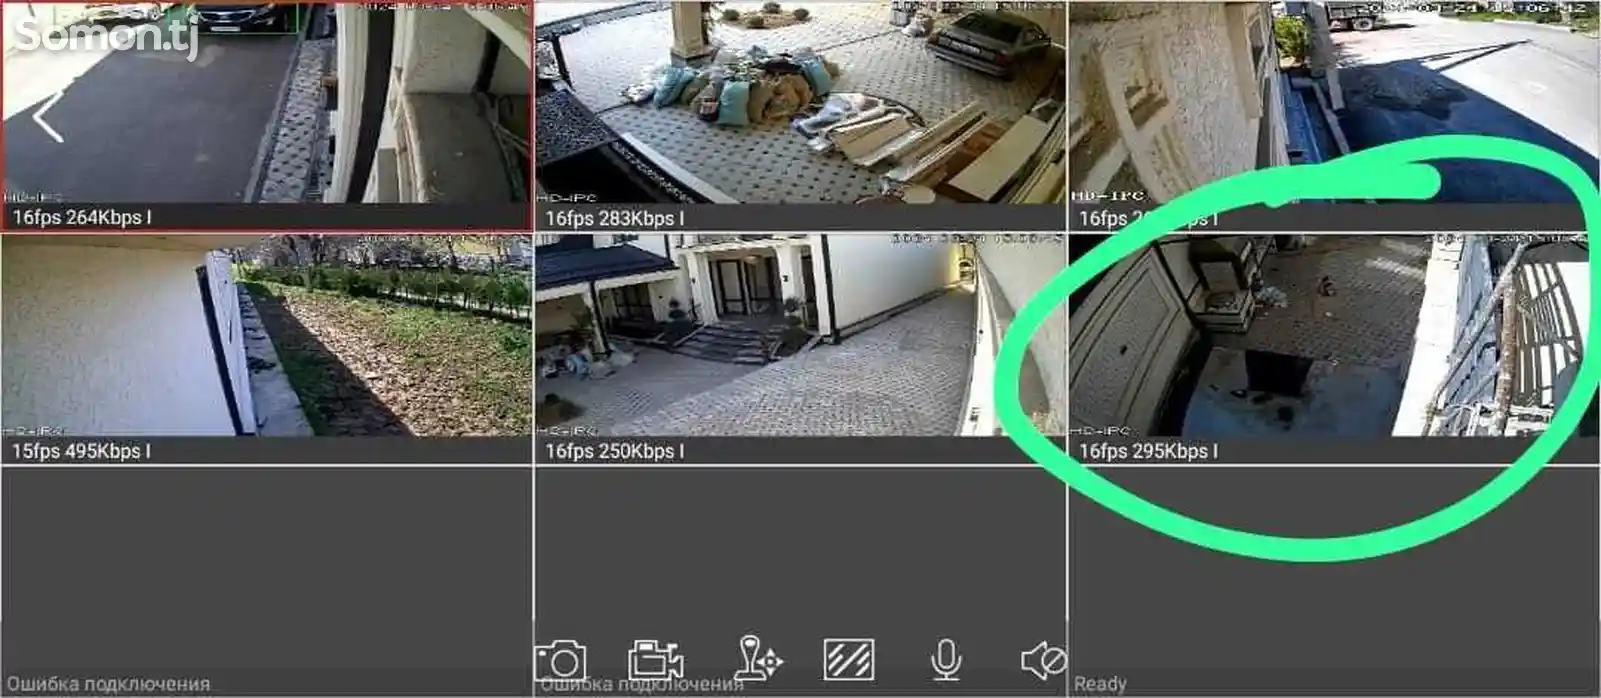 Услуги по установке камер видеонаблюдения с гарантией-12